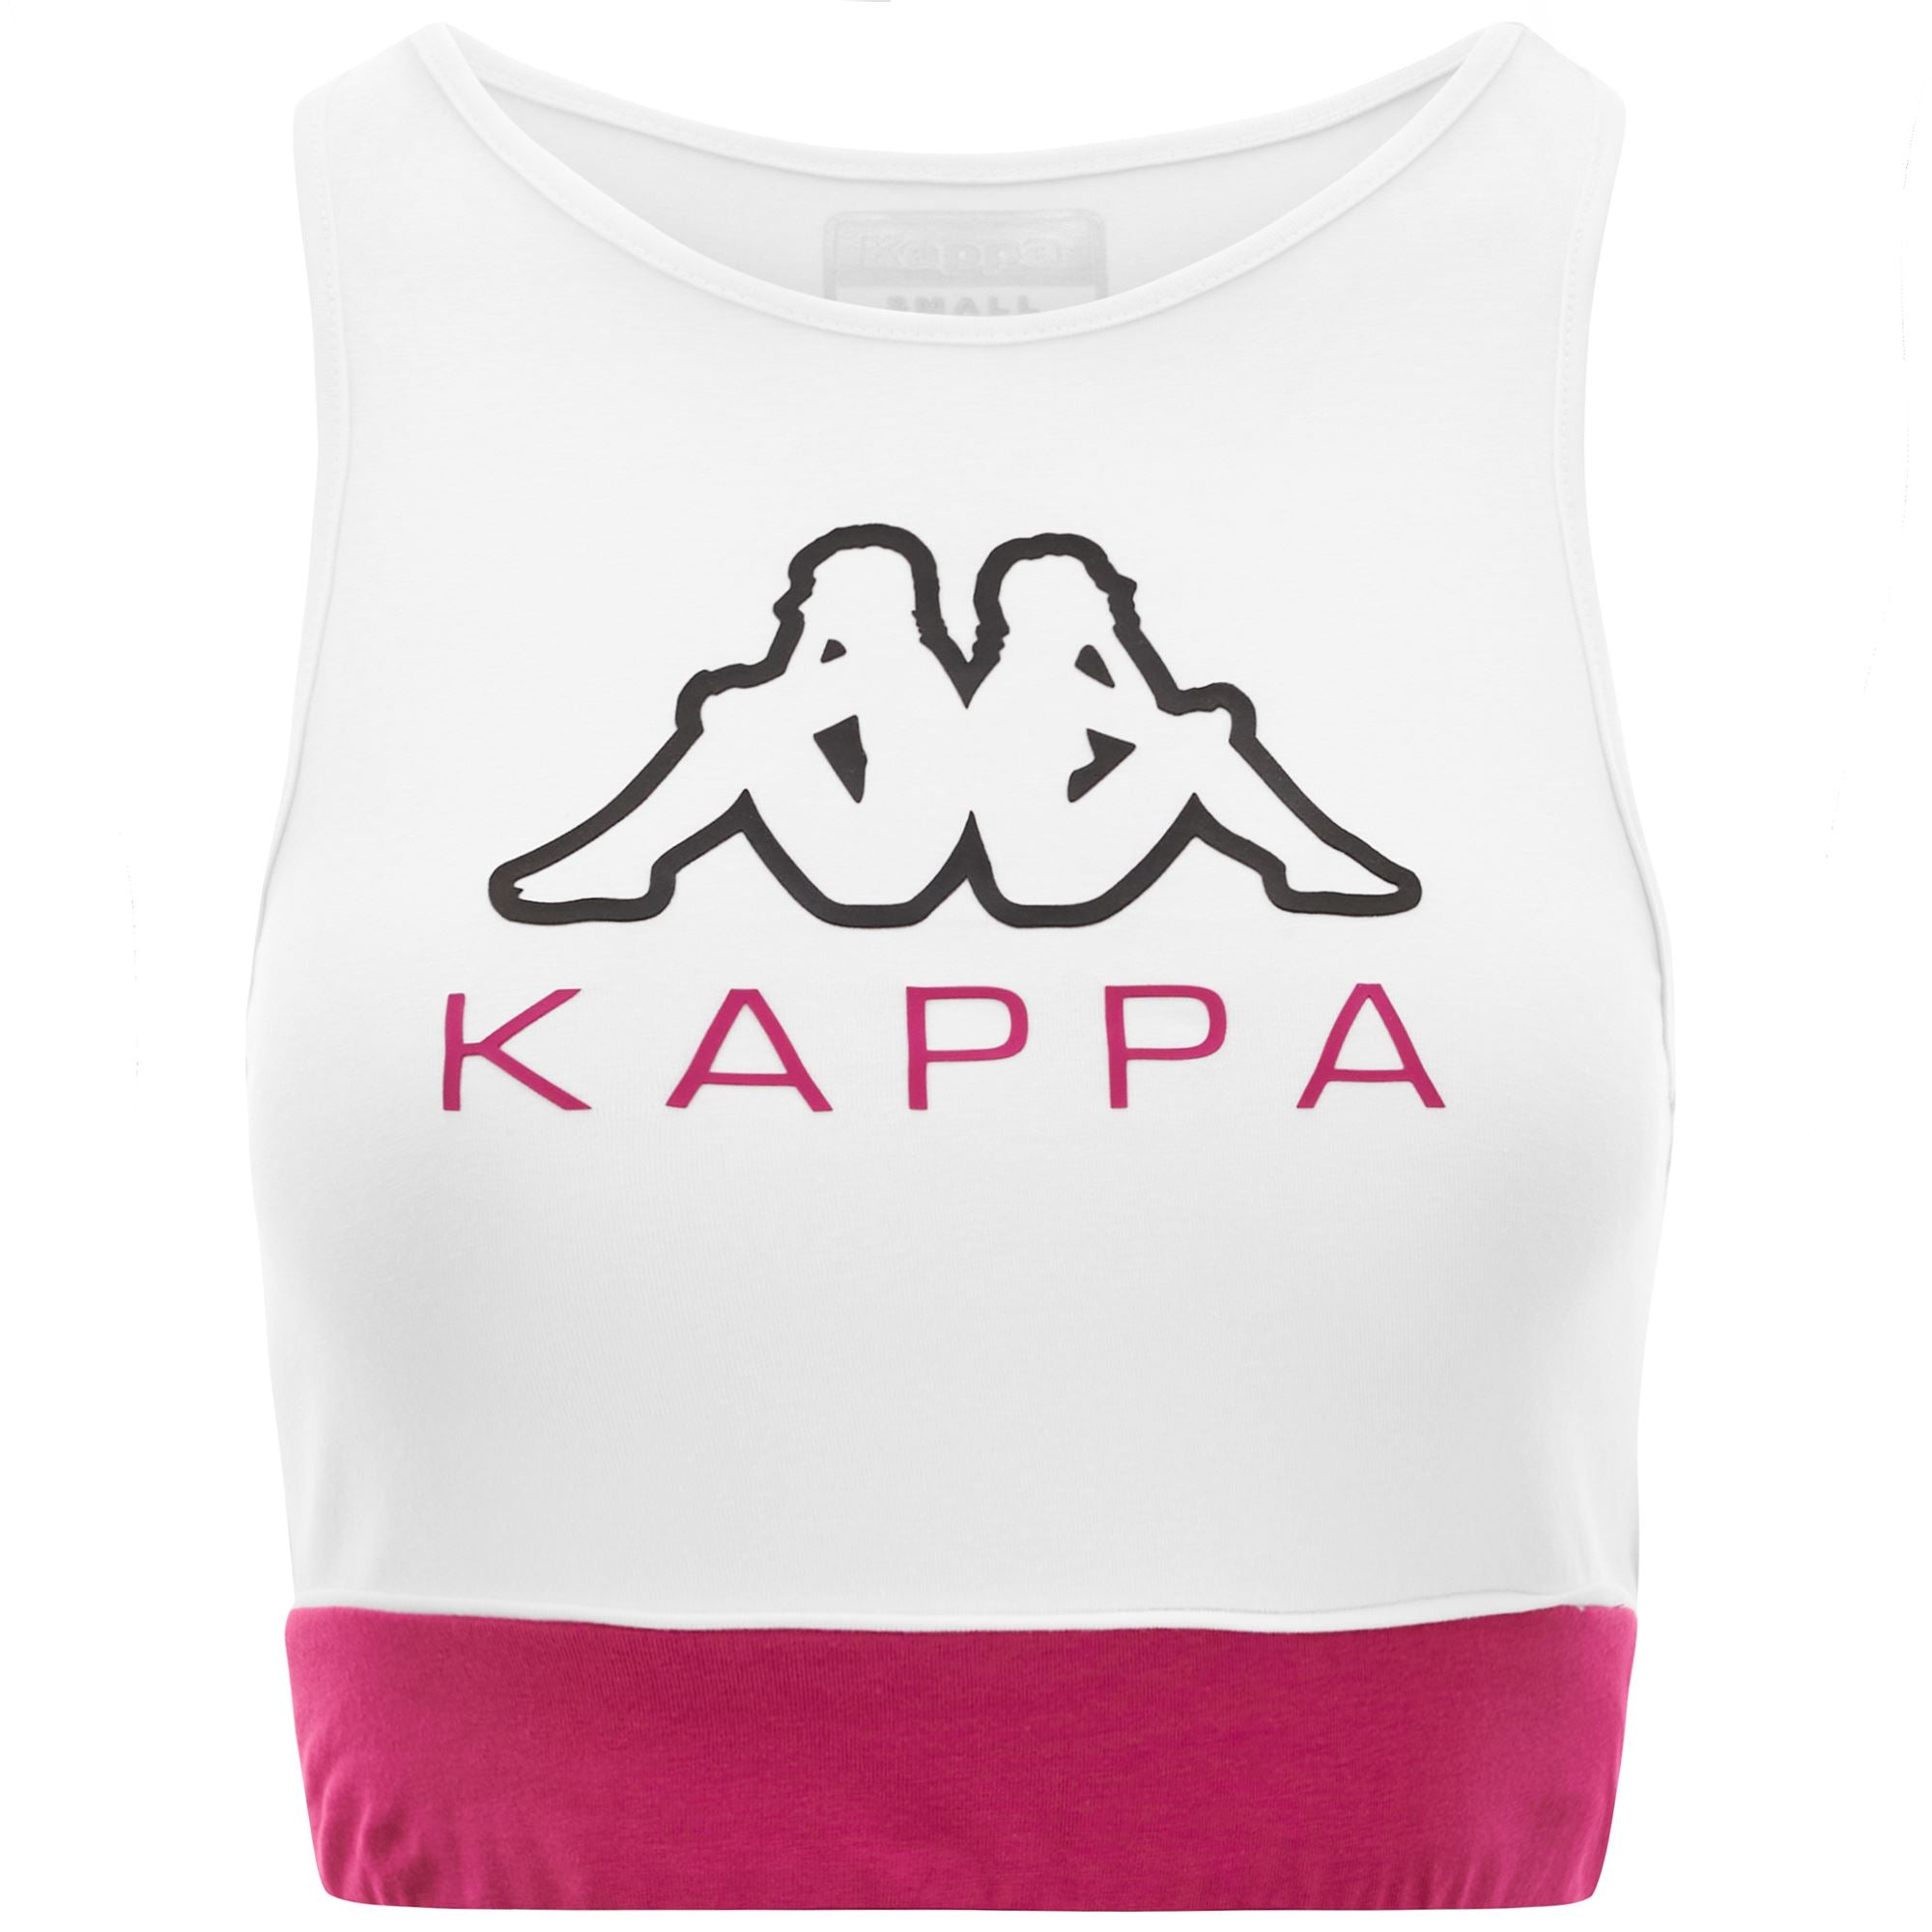 Kappa - Kappa - Camisetas y tops, Top - Mujer - logo eara